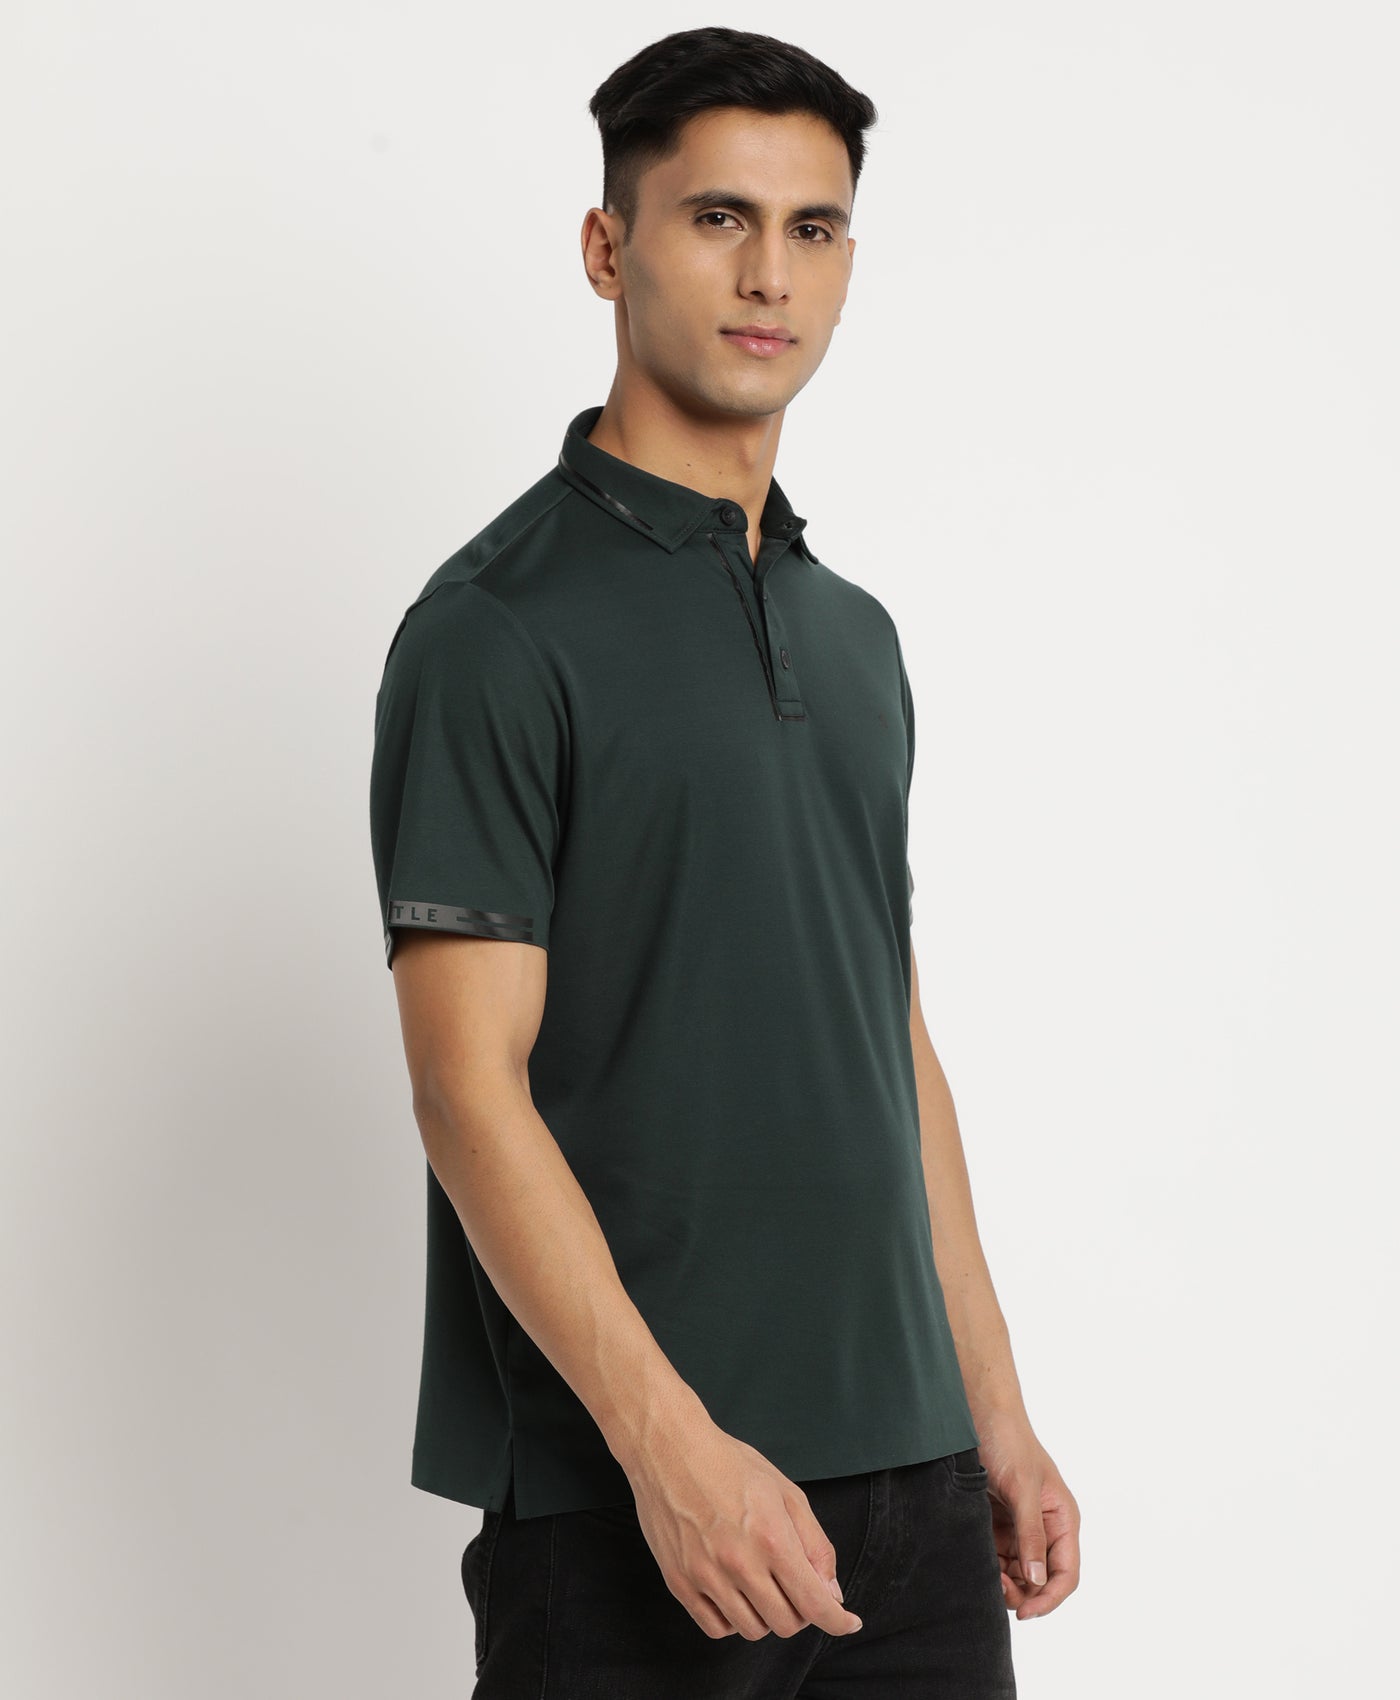 Cotton Dark Green Printed Polo Neck T-Shirt